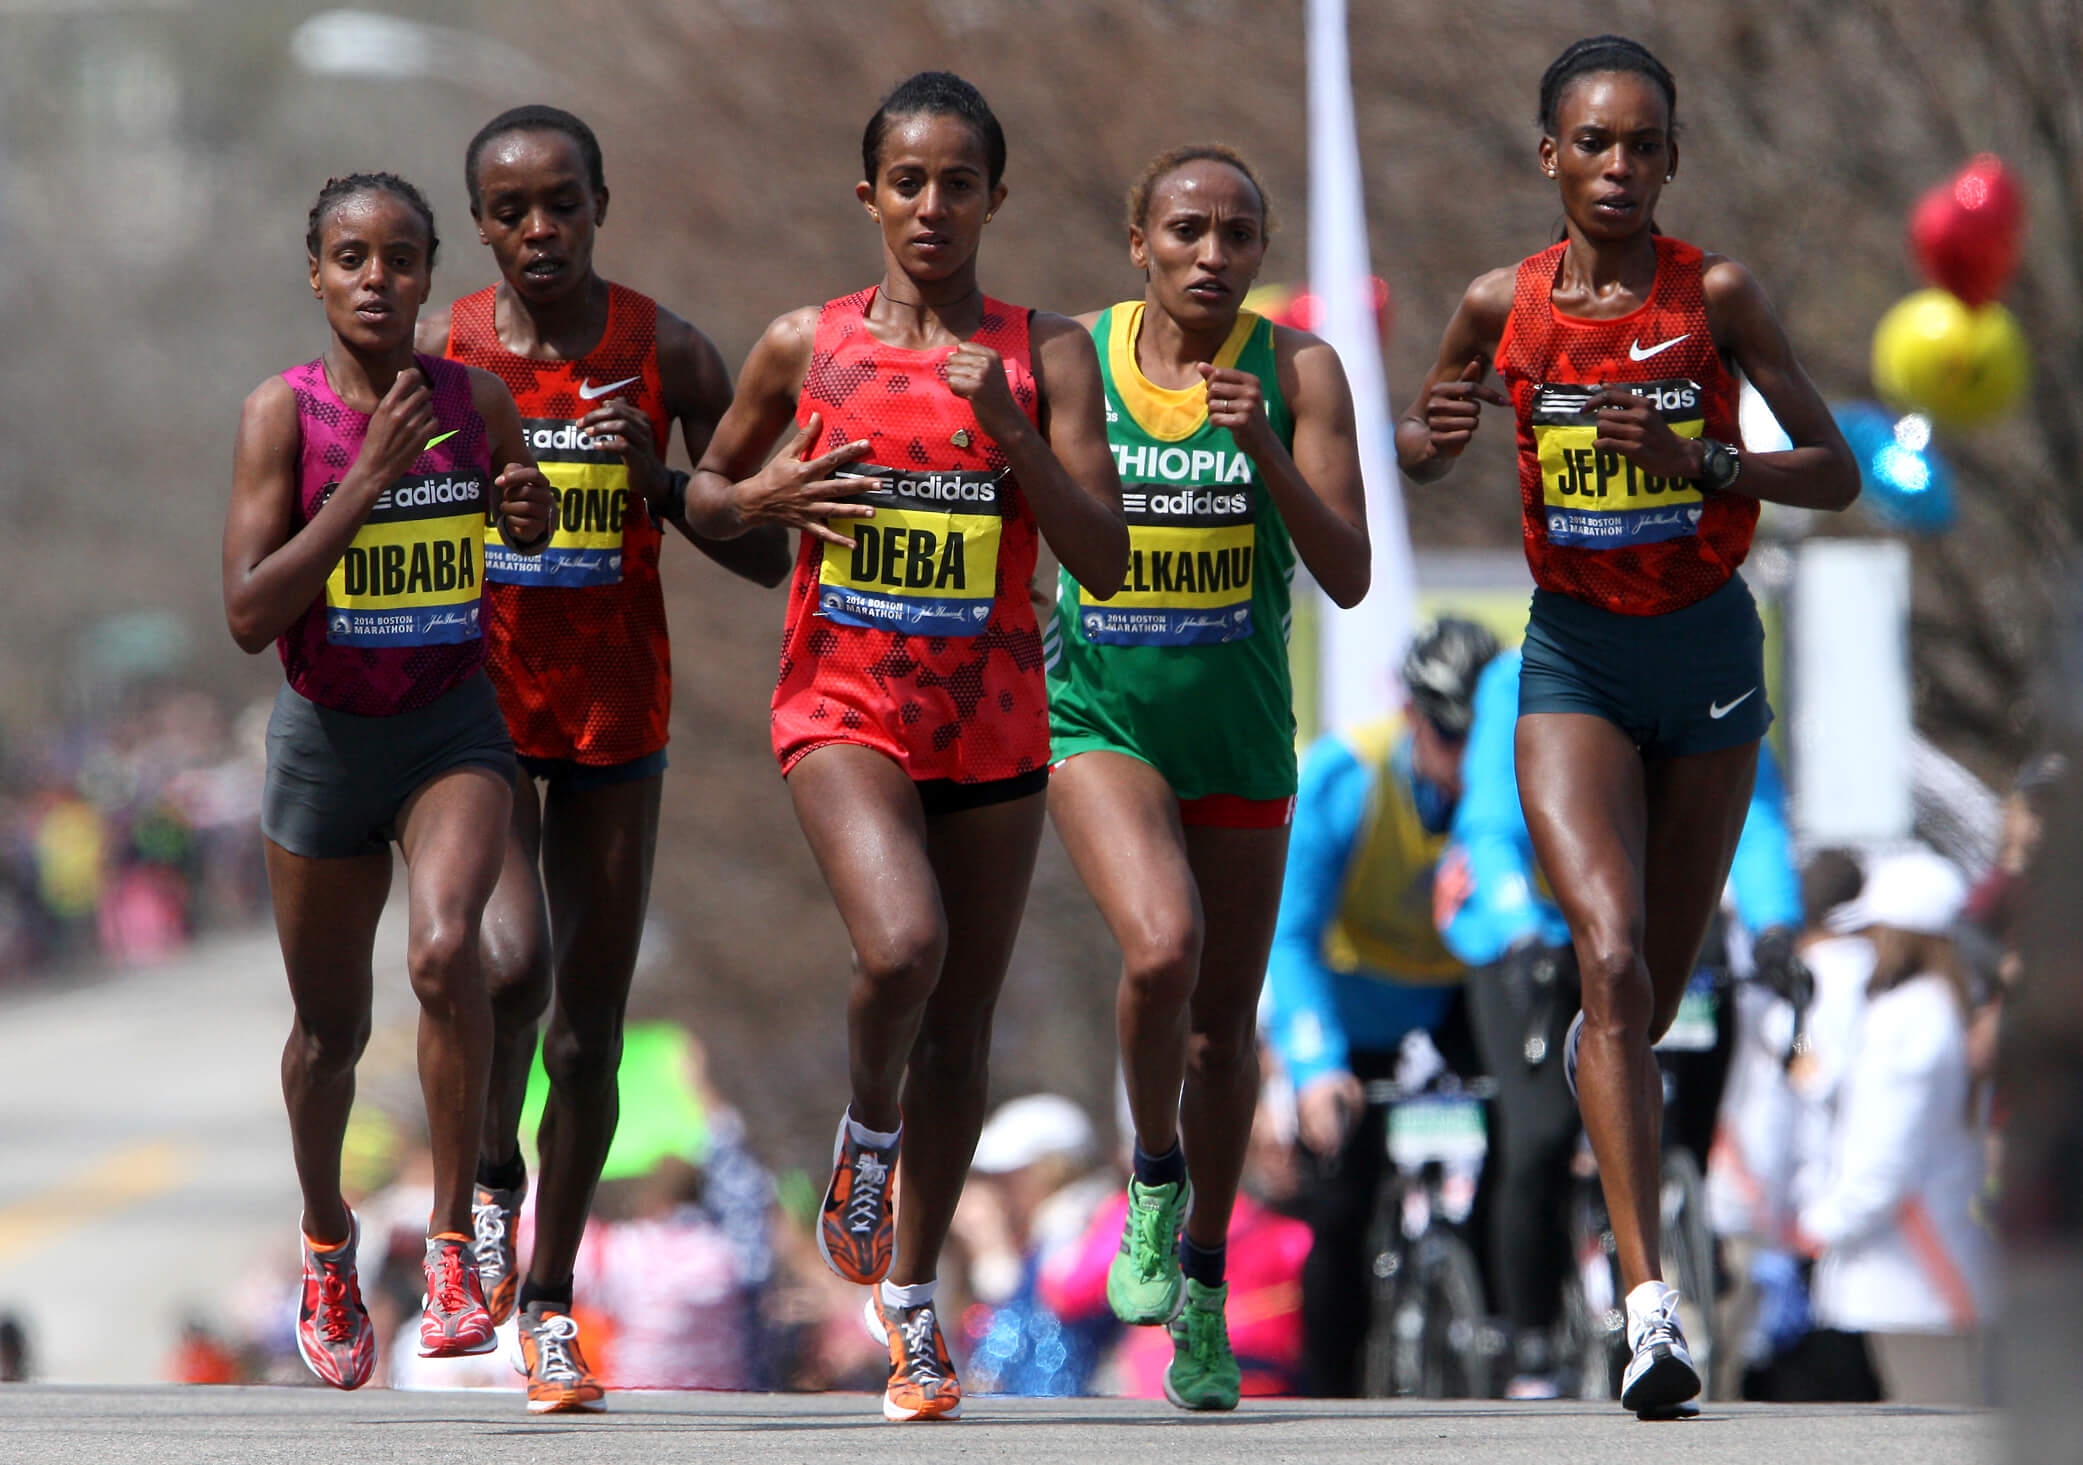 2014 Boston Marathon winner receives prize money from stranger